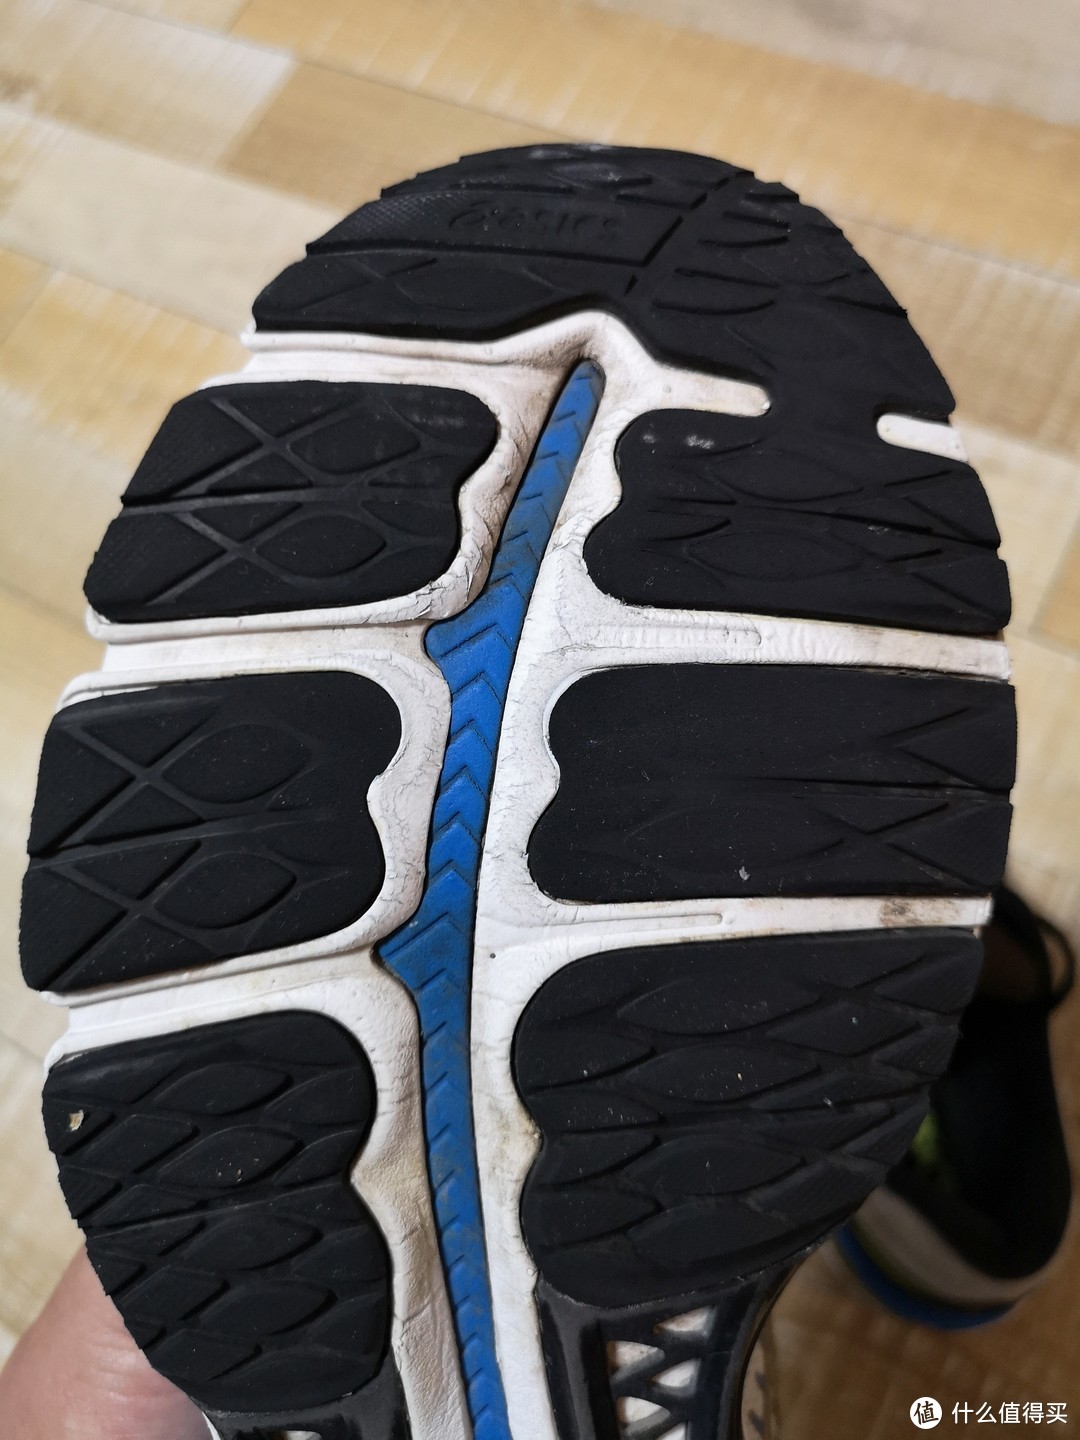 zapatillas de running ASICS voladoras maratón talla 37.5 amarillas